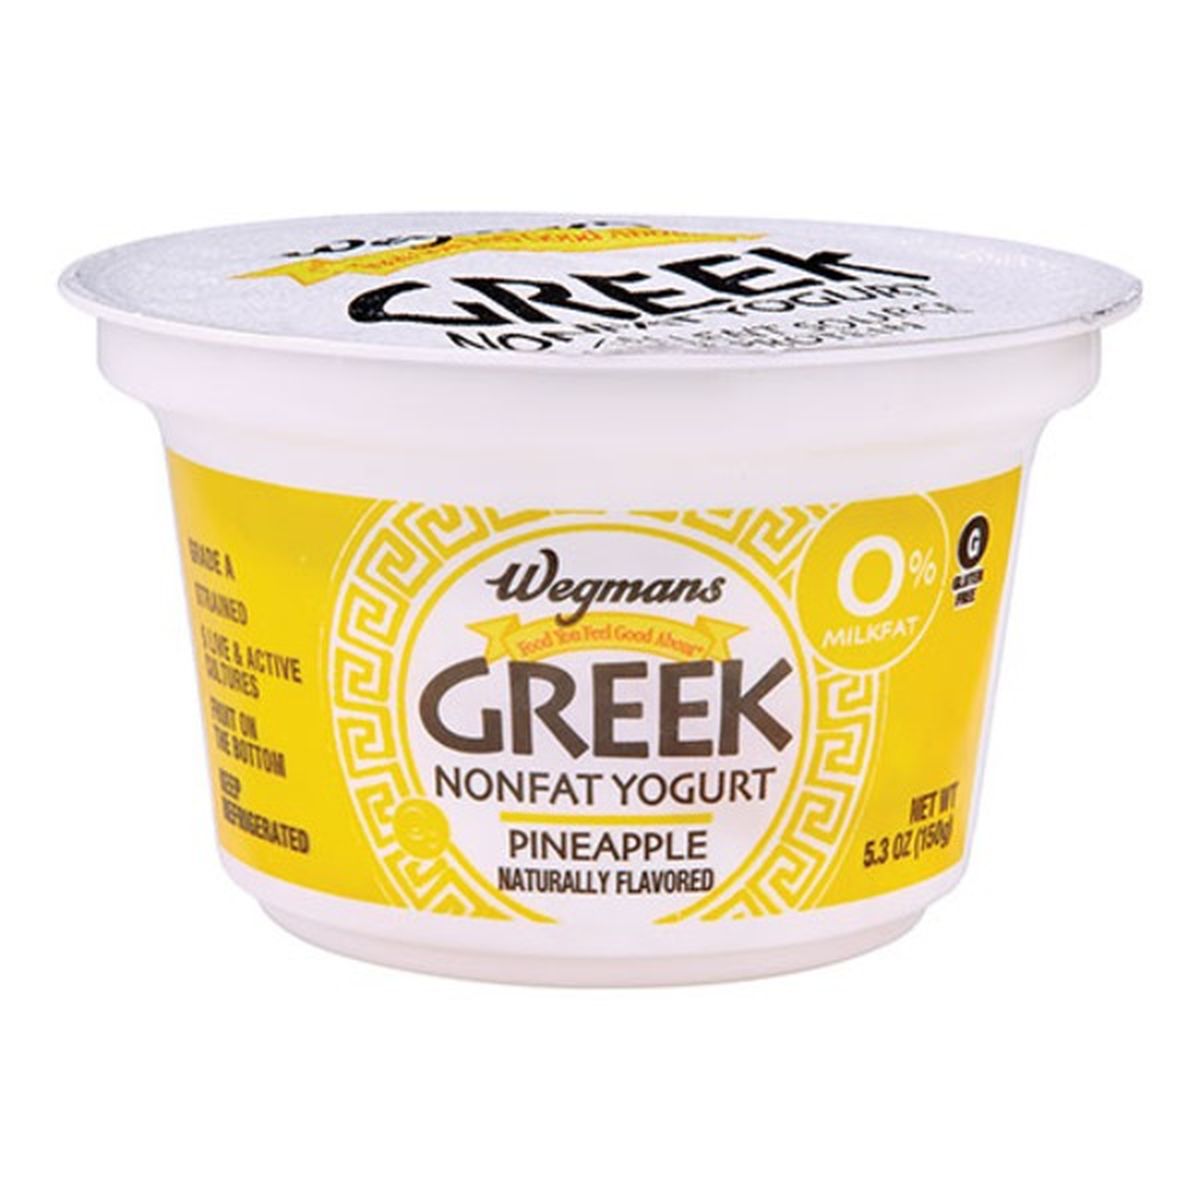 Calories in Wegmans Greek Pineapple Nonfat Yogurt